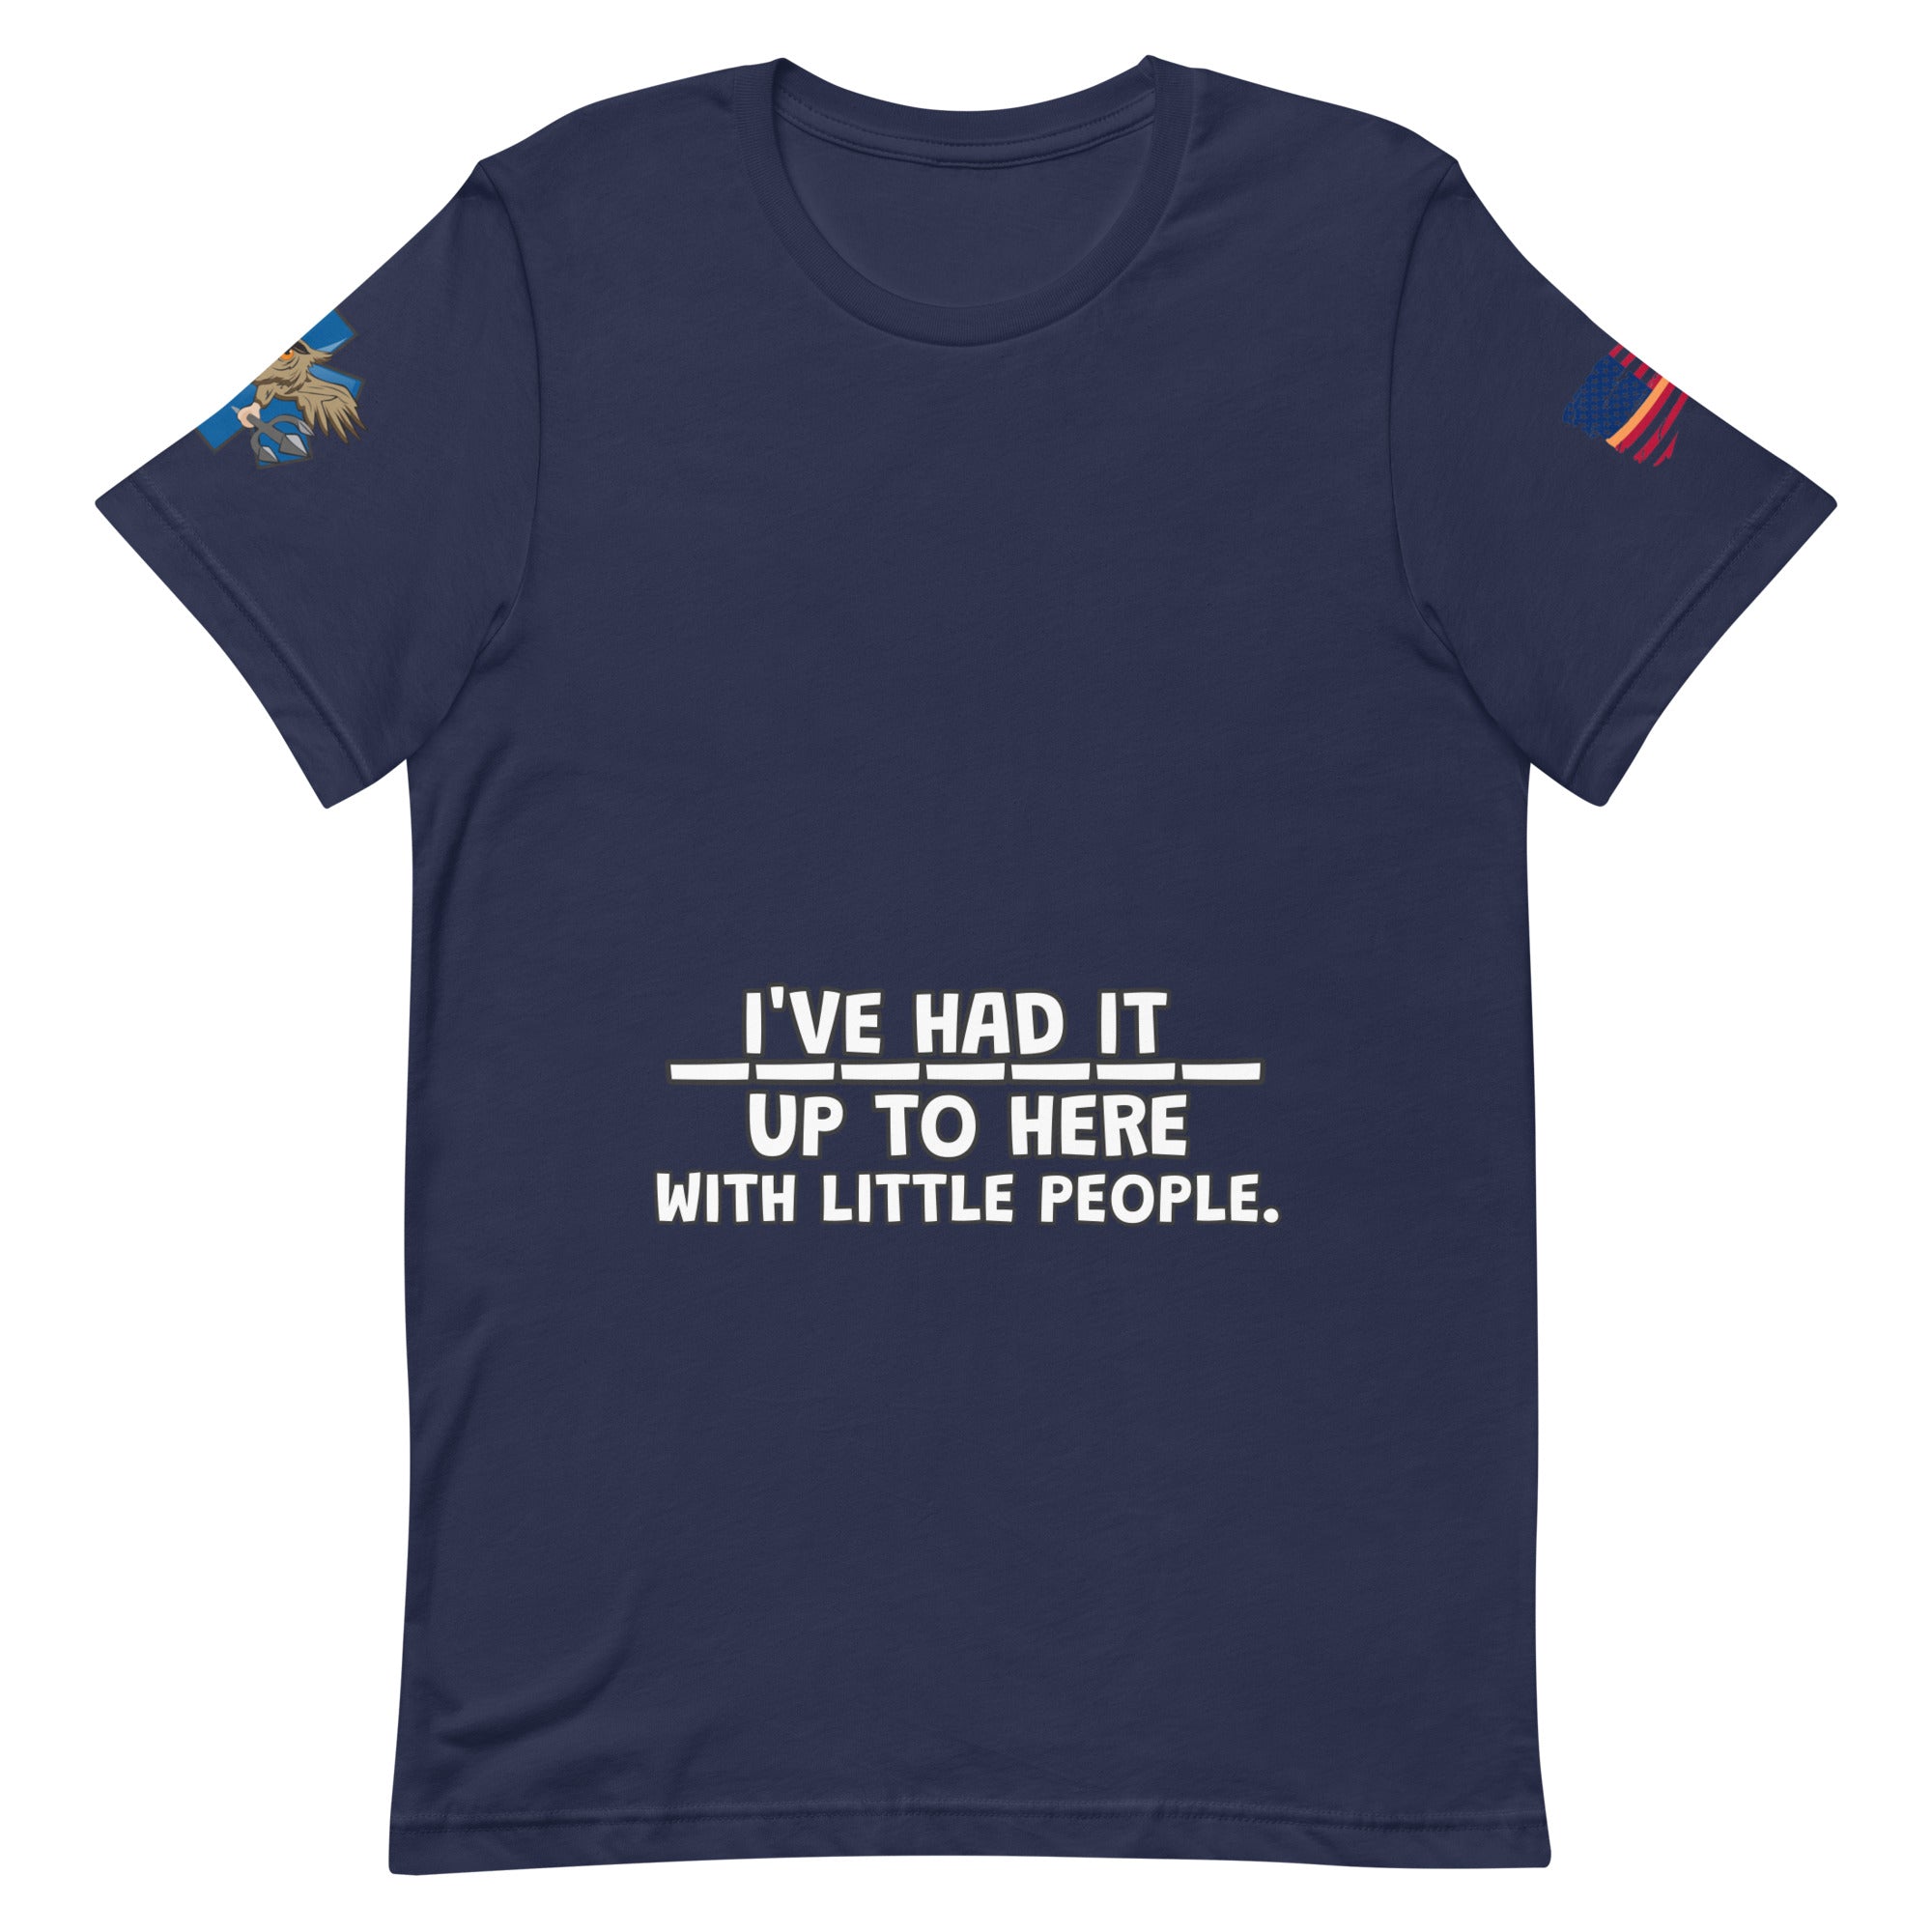 'Little People' t-shirt